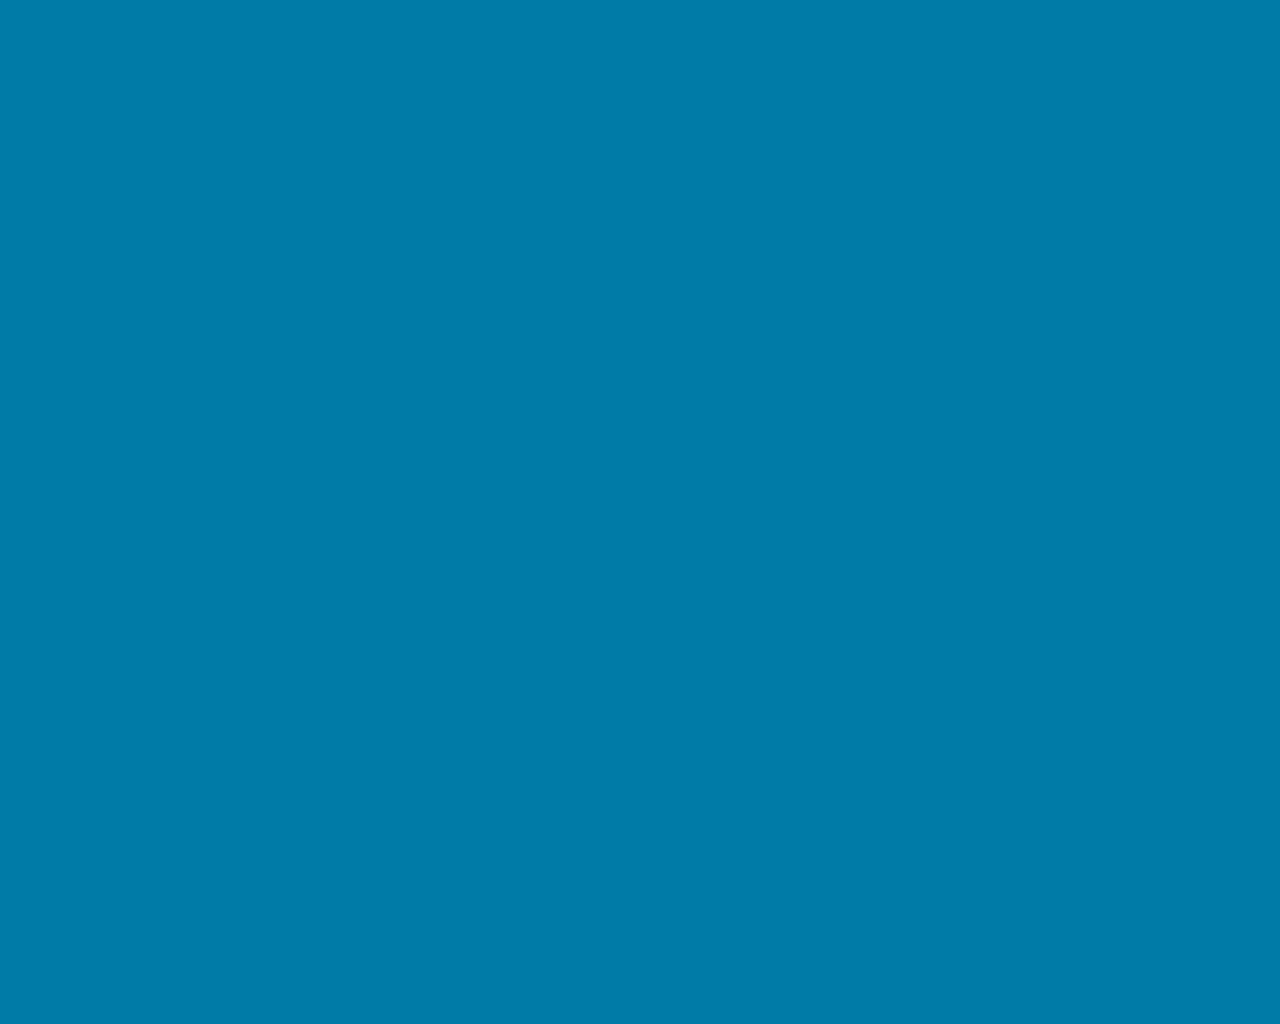 1280x1024 Celadon Blue Solid Color Background